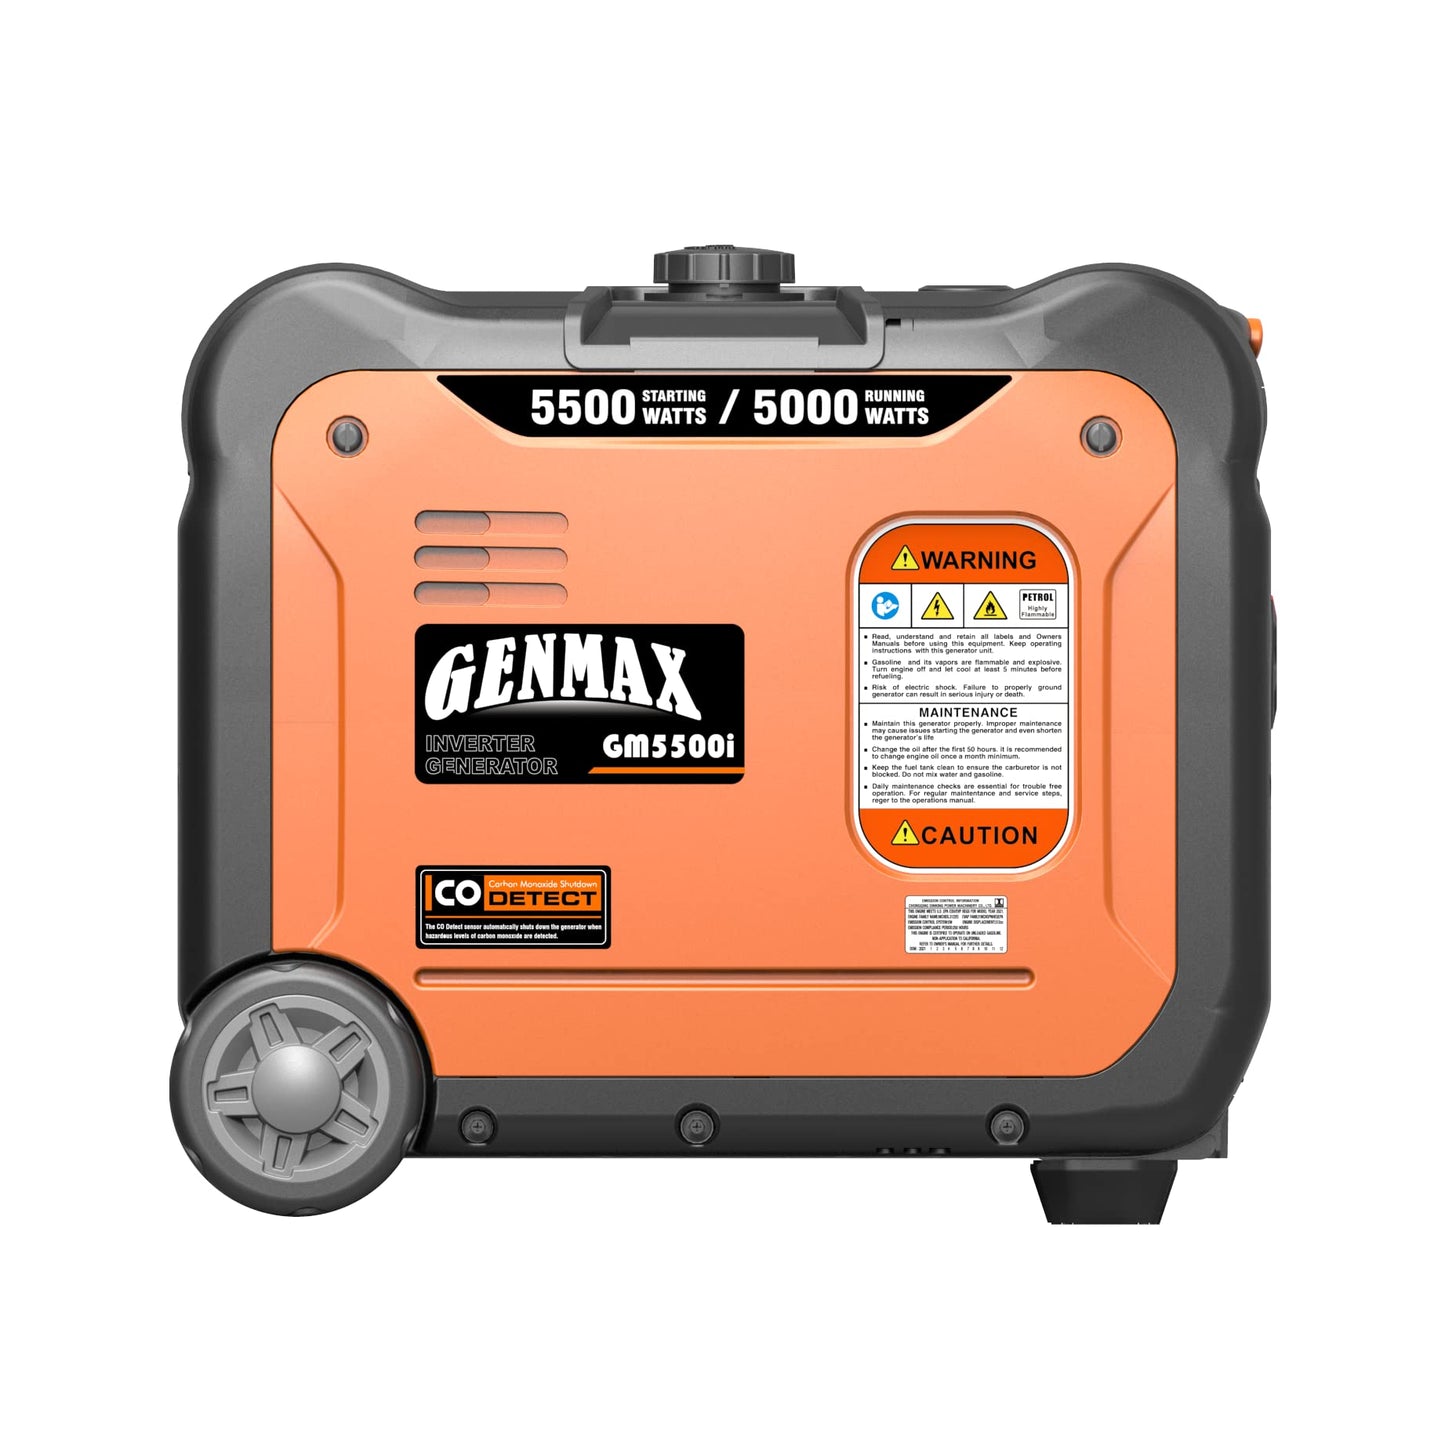 GENMAX GM5500i 500W Ultra-Quiet Gas Engine Portable Inverter Generator - EPA Compliant